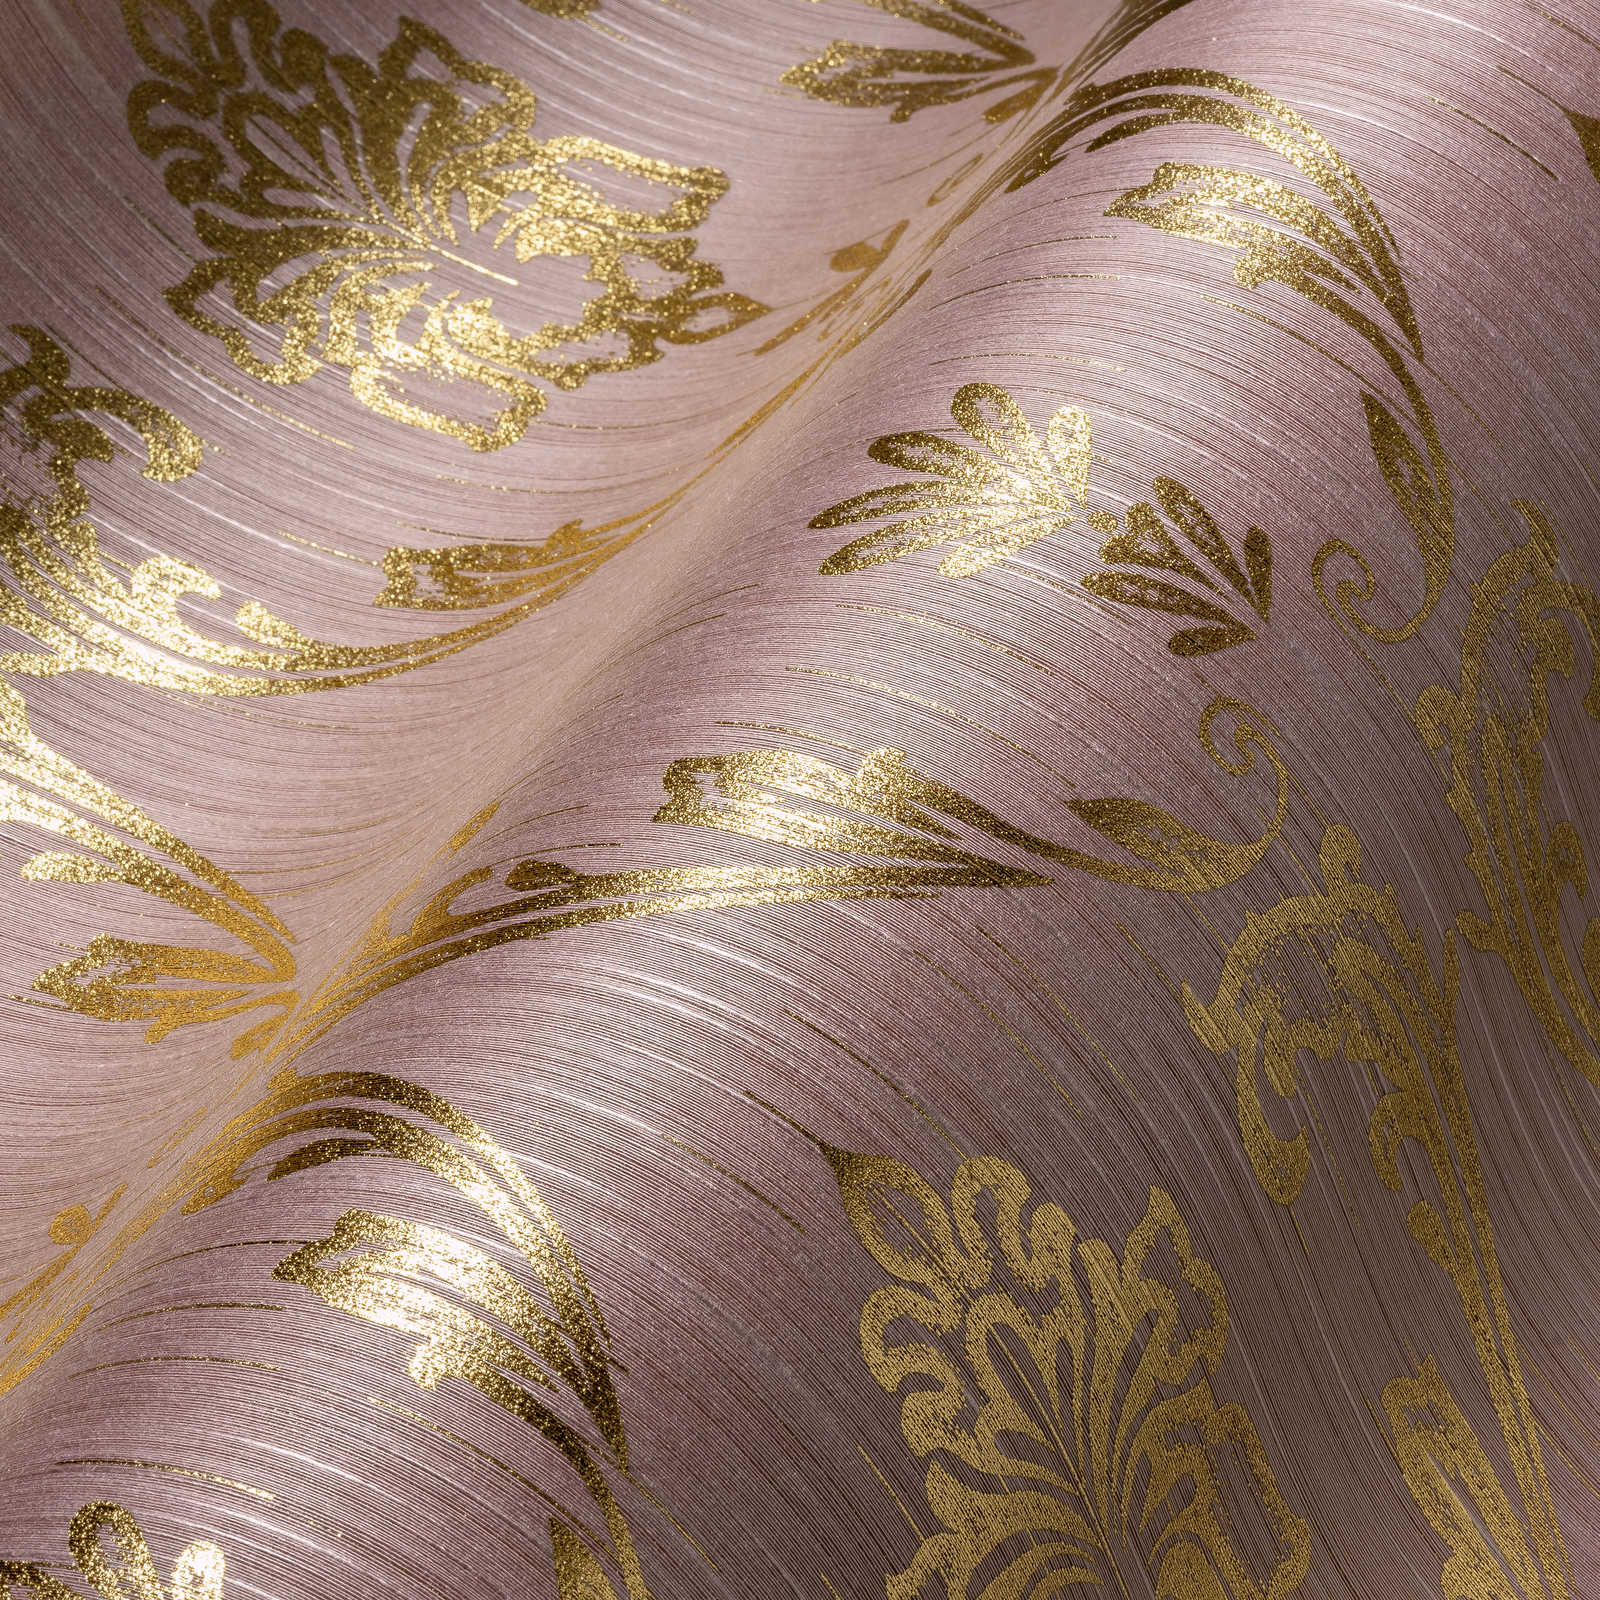             Ornamenttapete mit floralen Elementen in Gold – Gold, Rosa
        